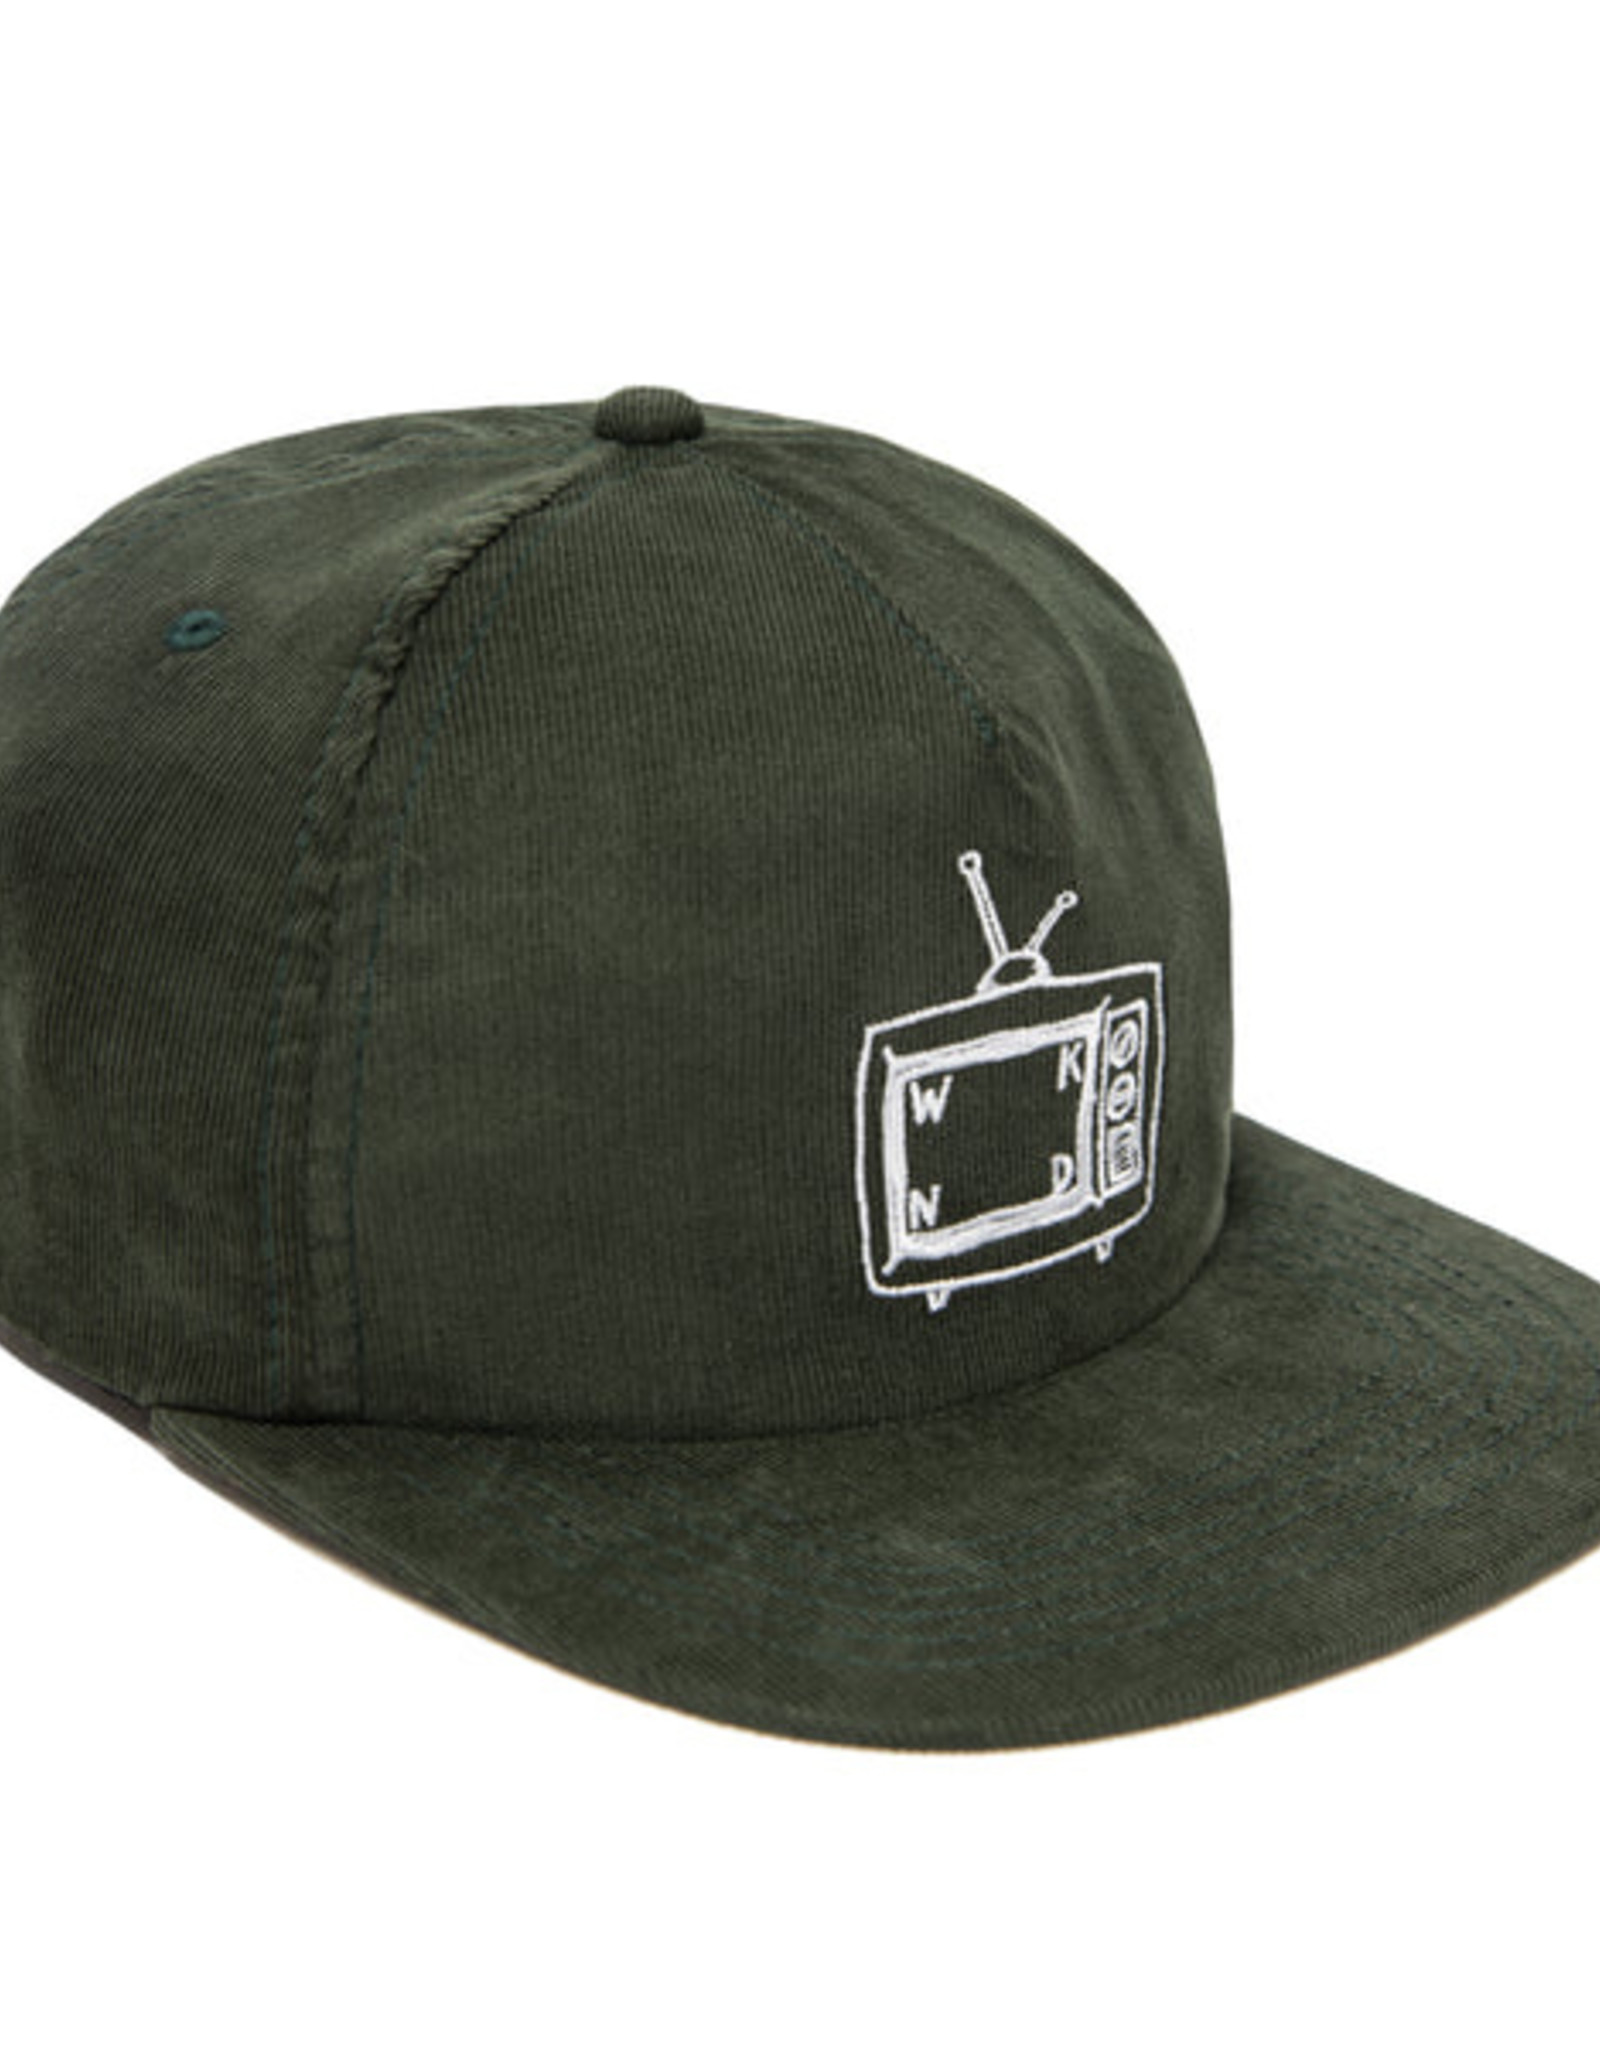 WKND CORD TV LOGO 5 PANEL CAP - GREEN